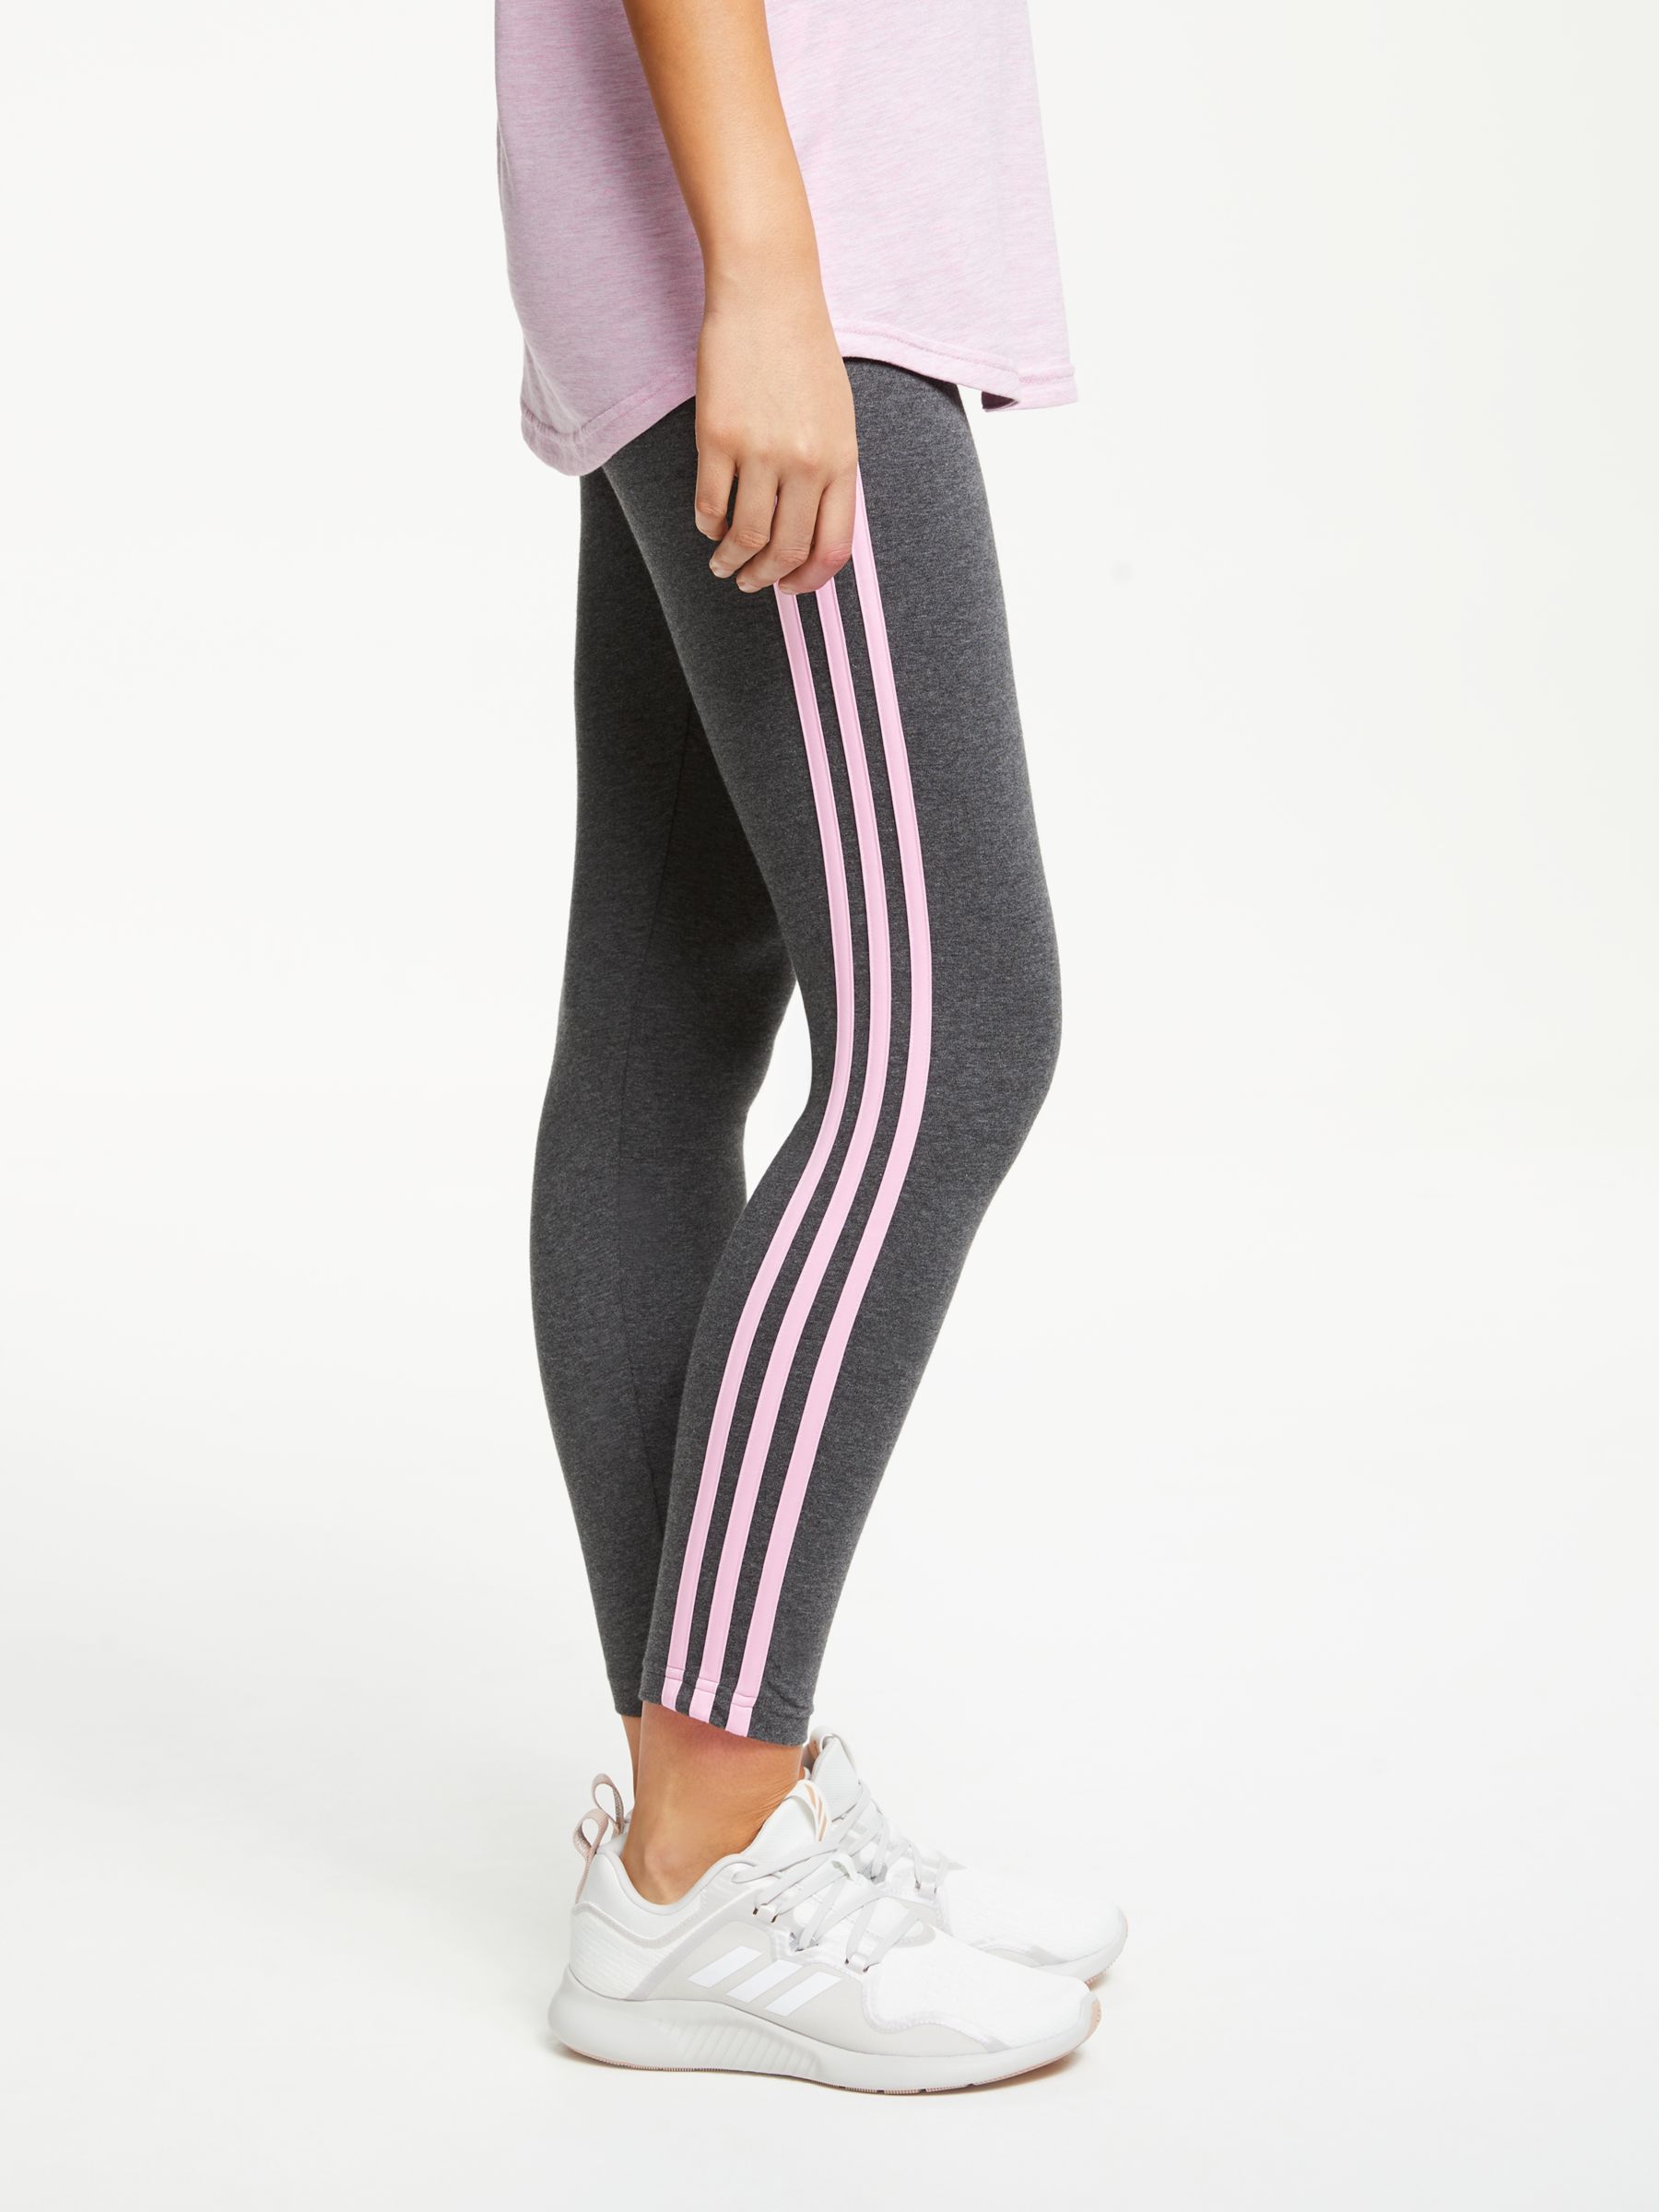 adidas training three stripe leggings in dark pink